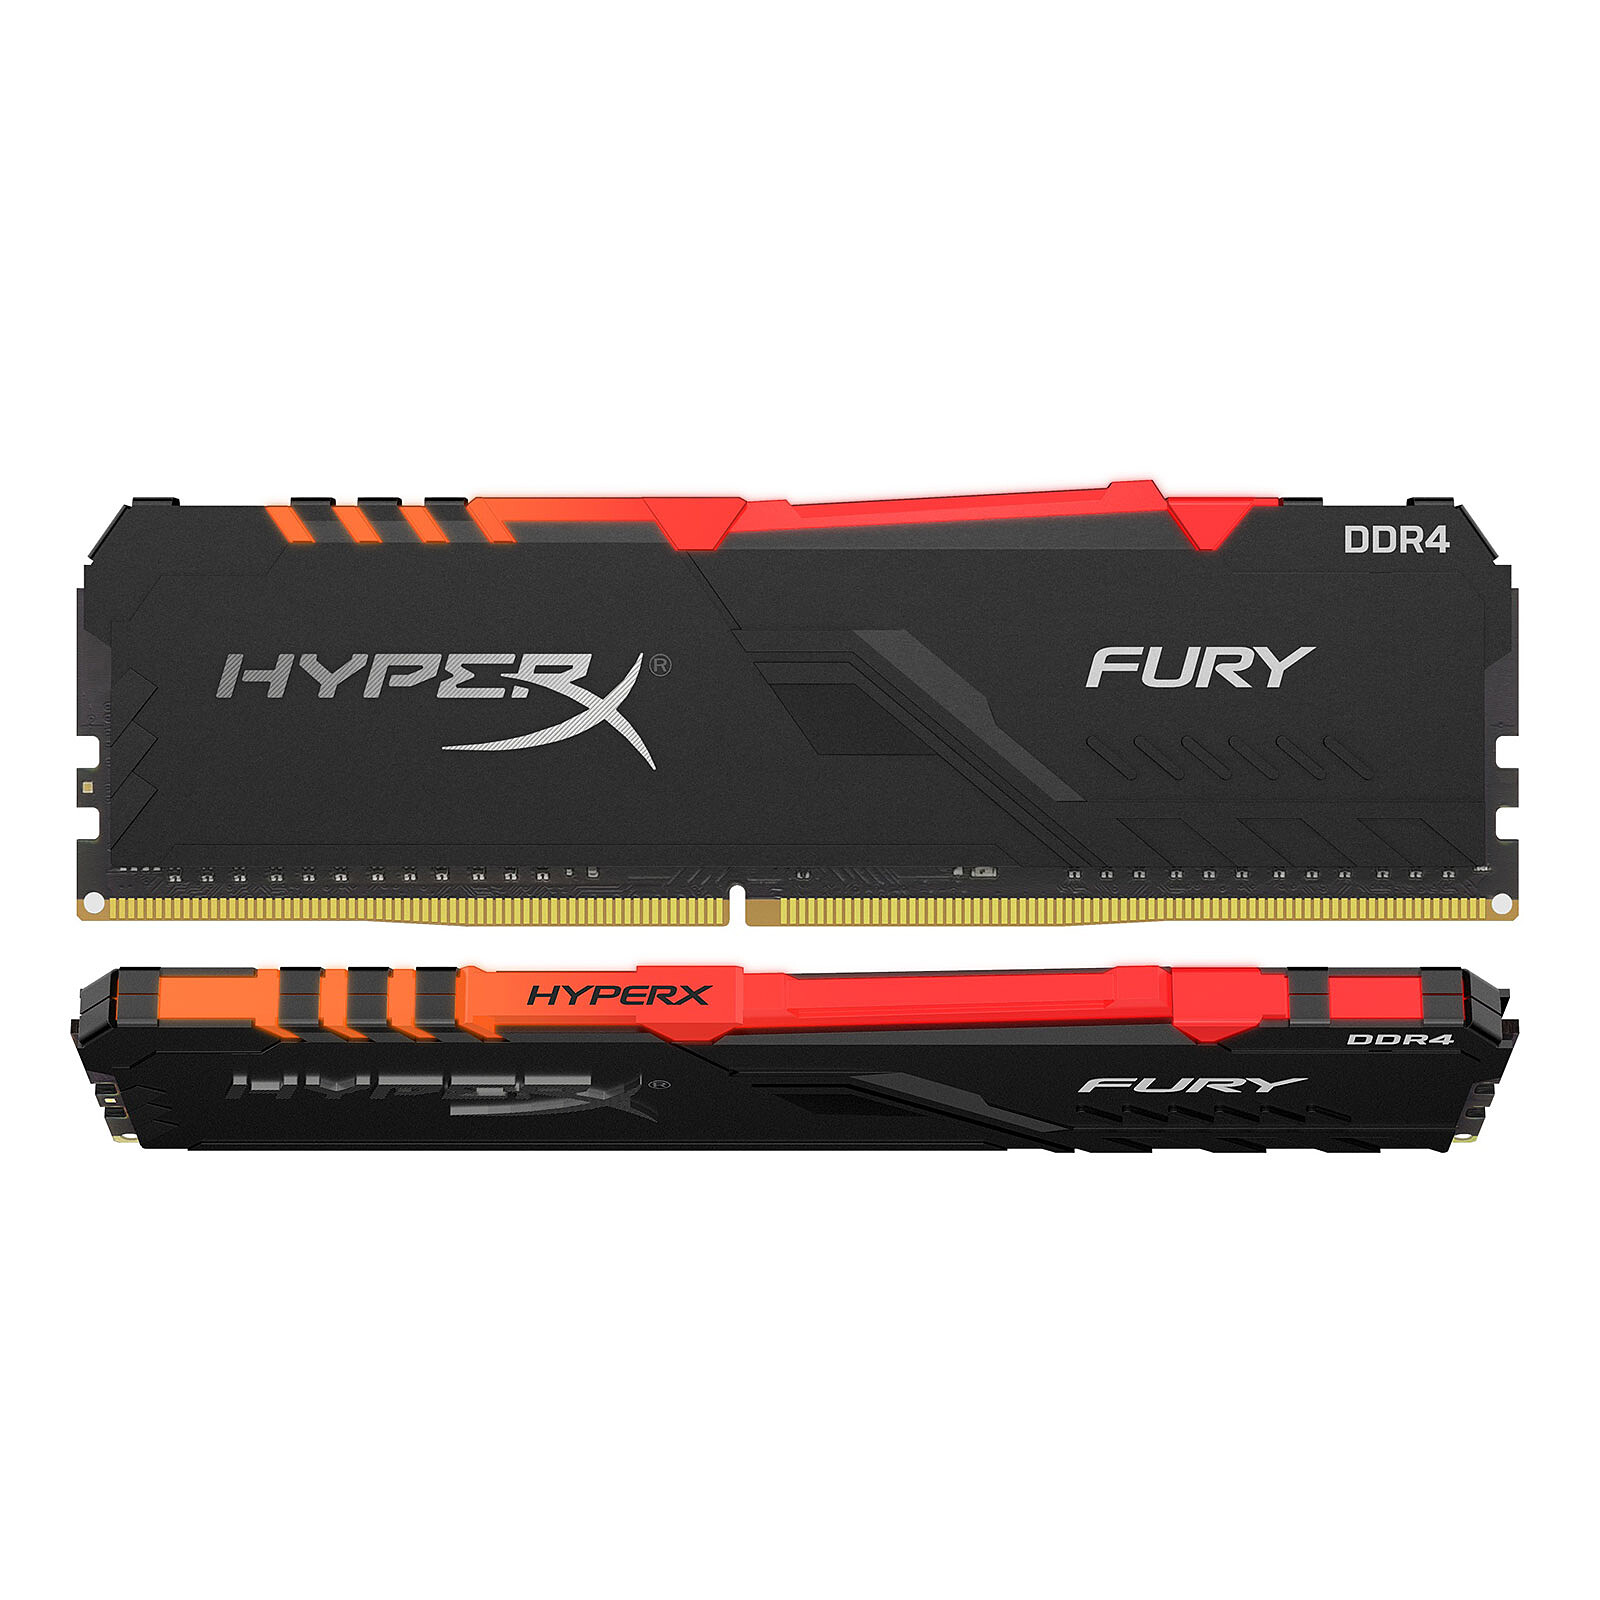 HyperX FURY DDR4-3466 16GB Dual-Channel Memory Kit Review